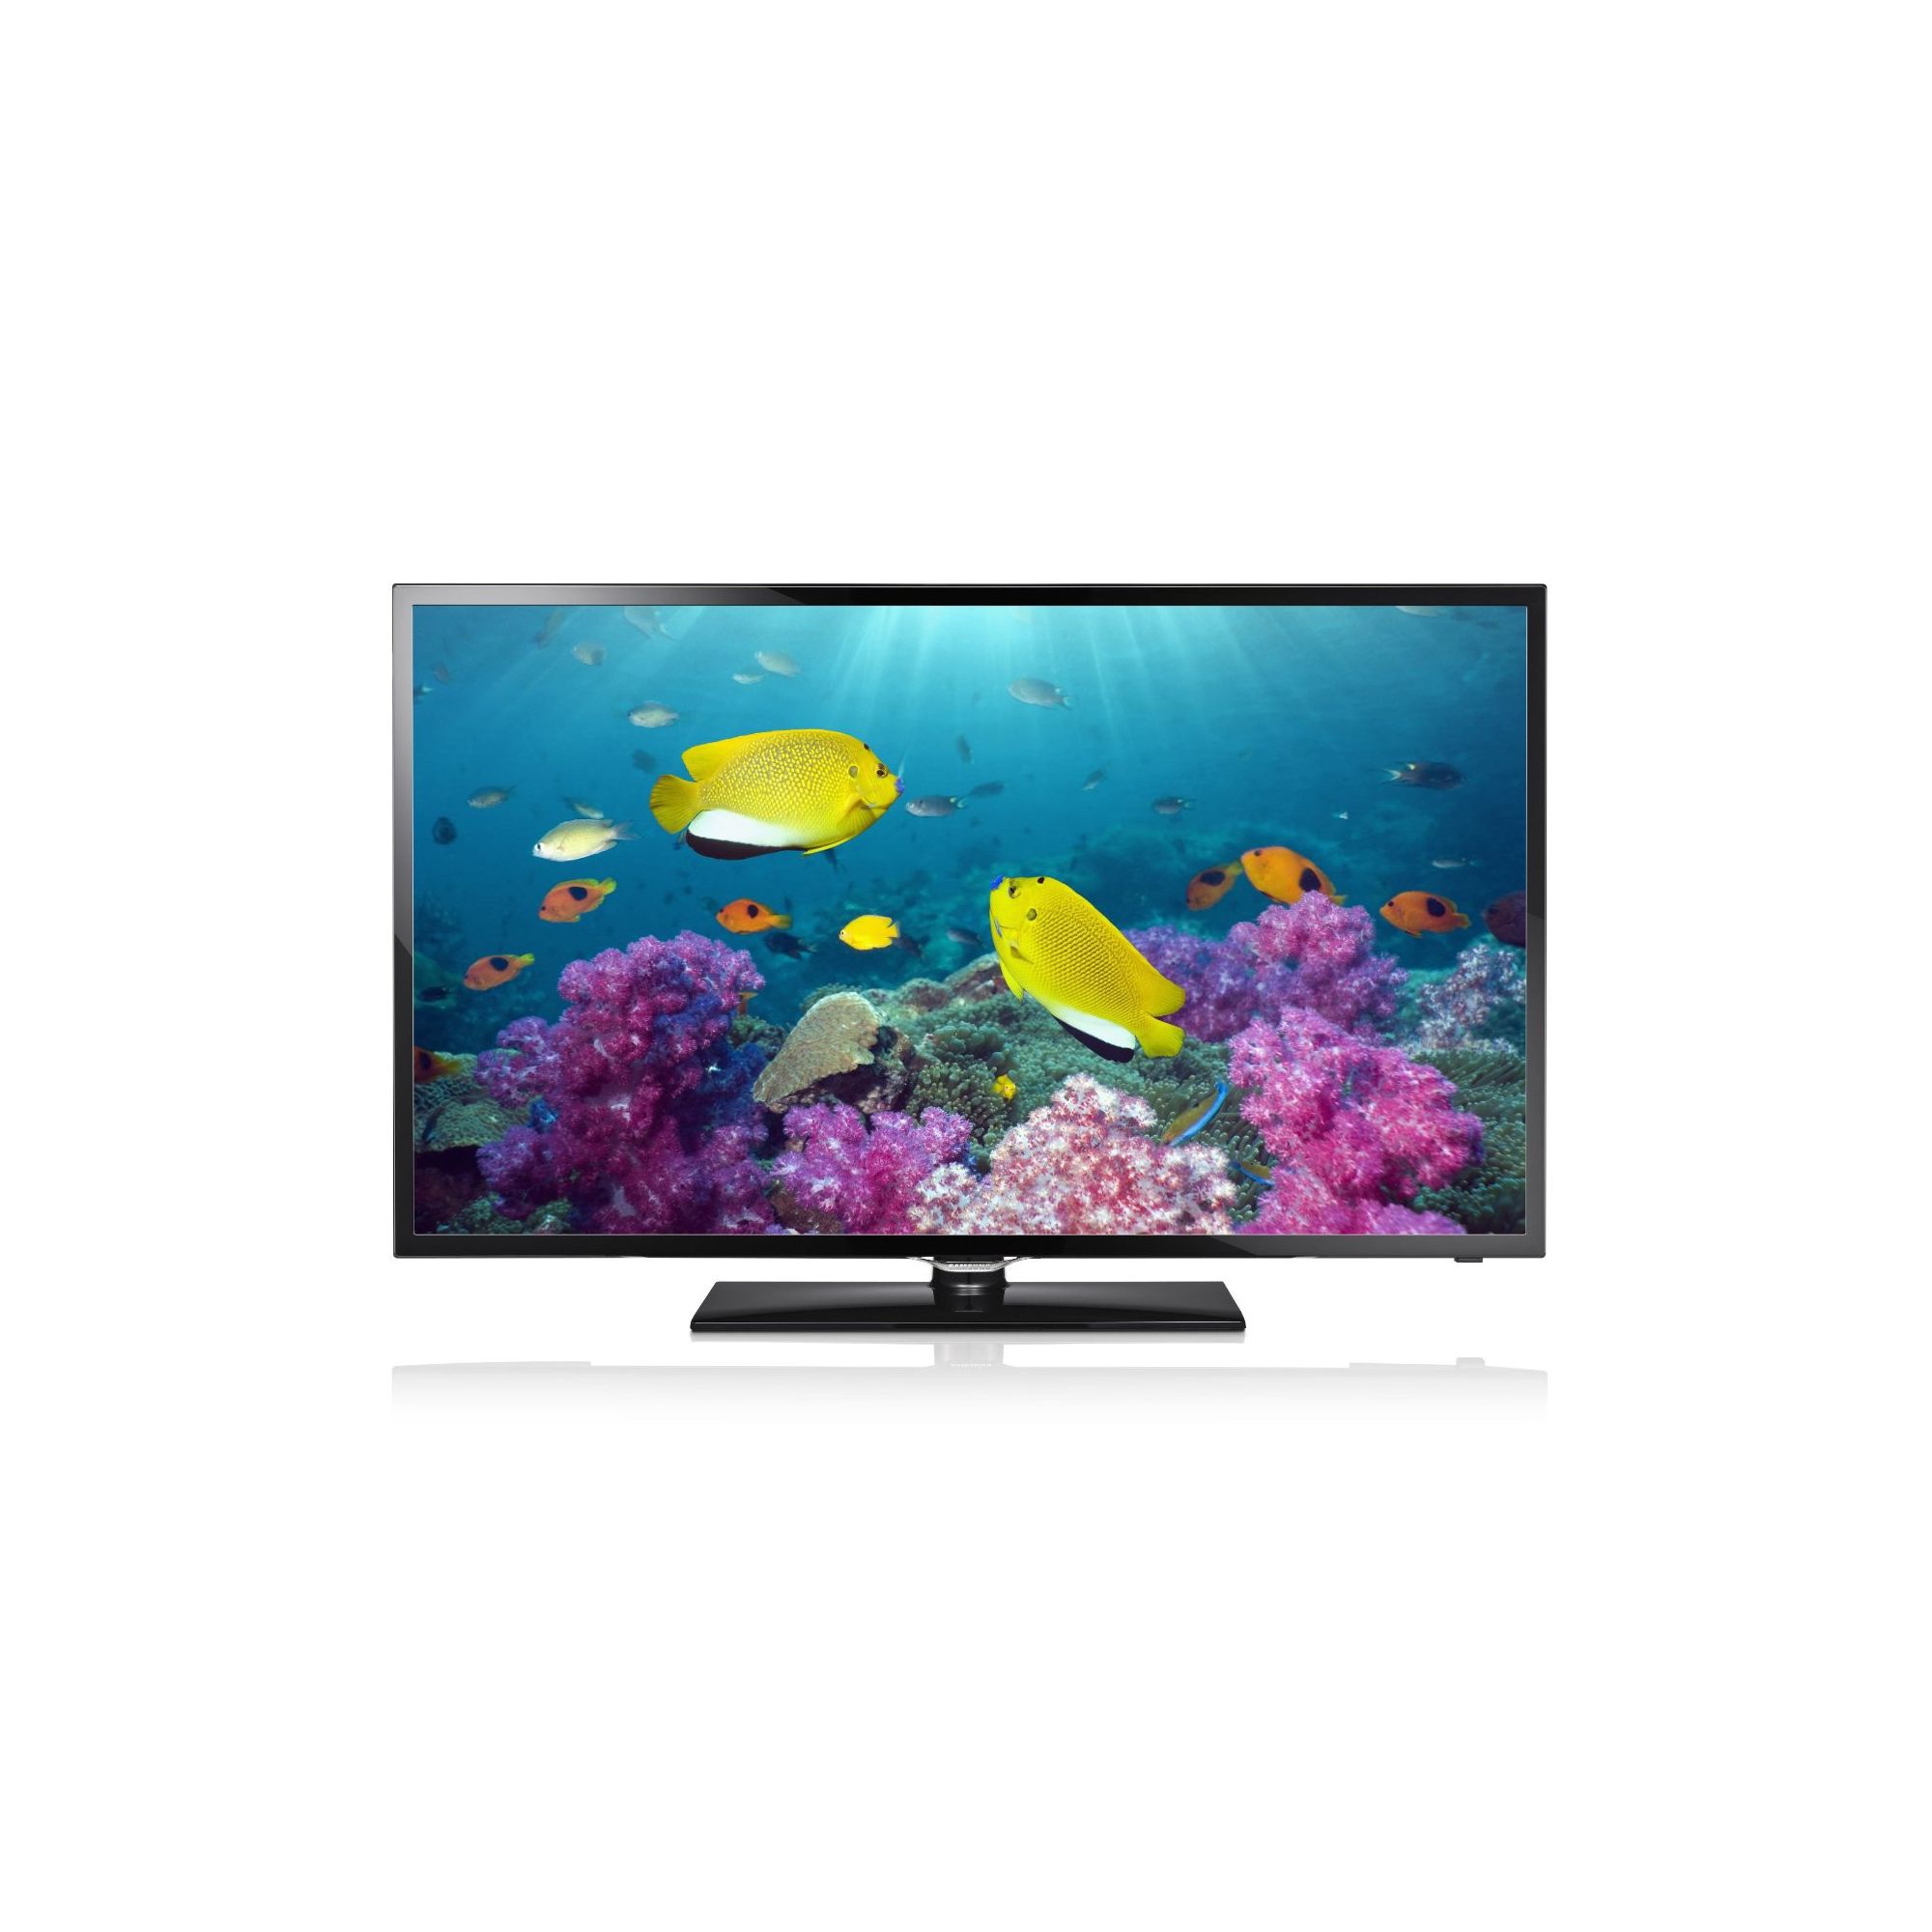 Samsung 40” F5500 Series 5 Smart Full HD LED TV